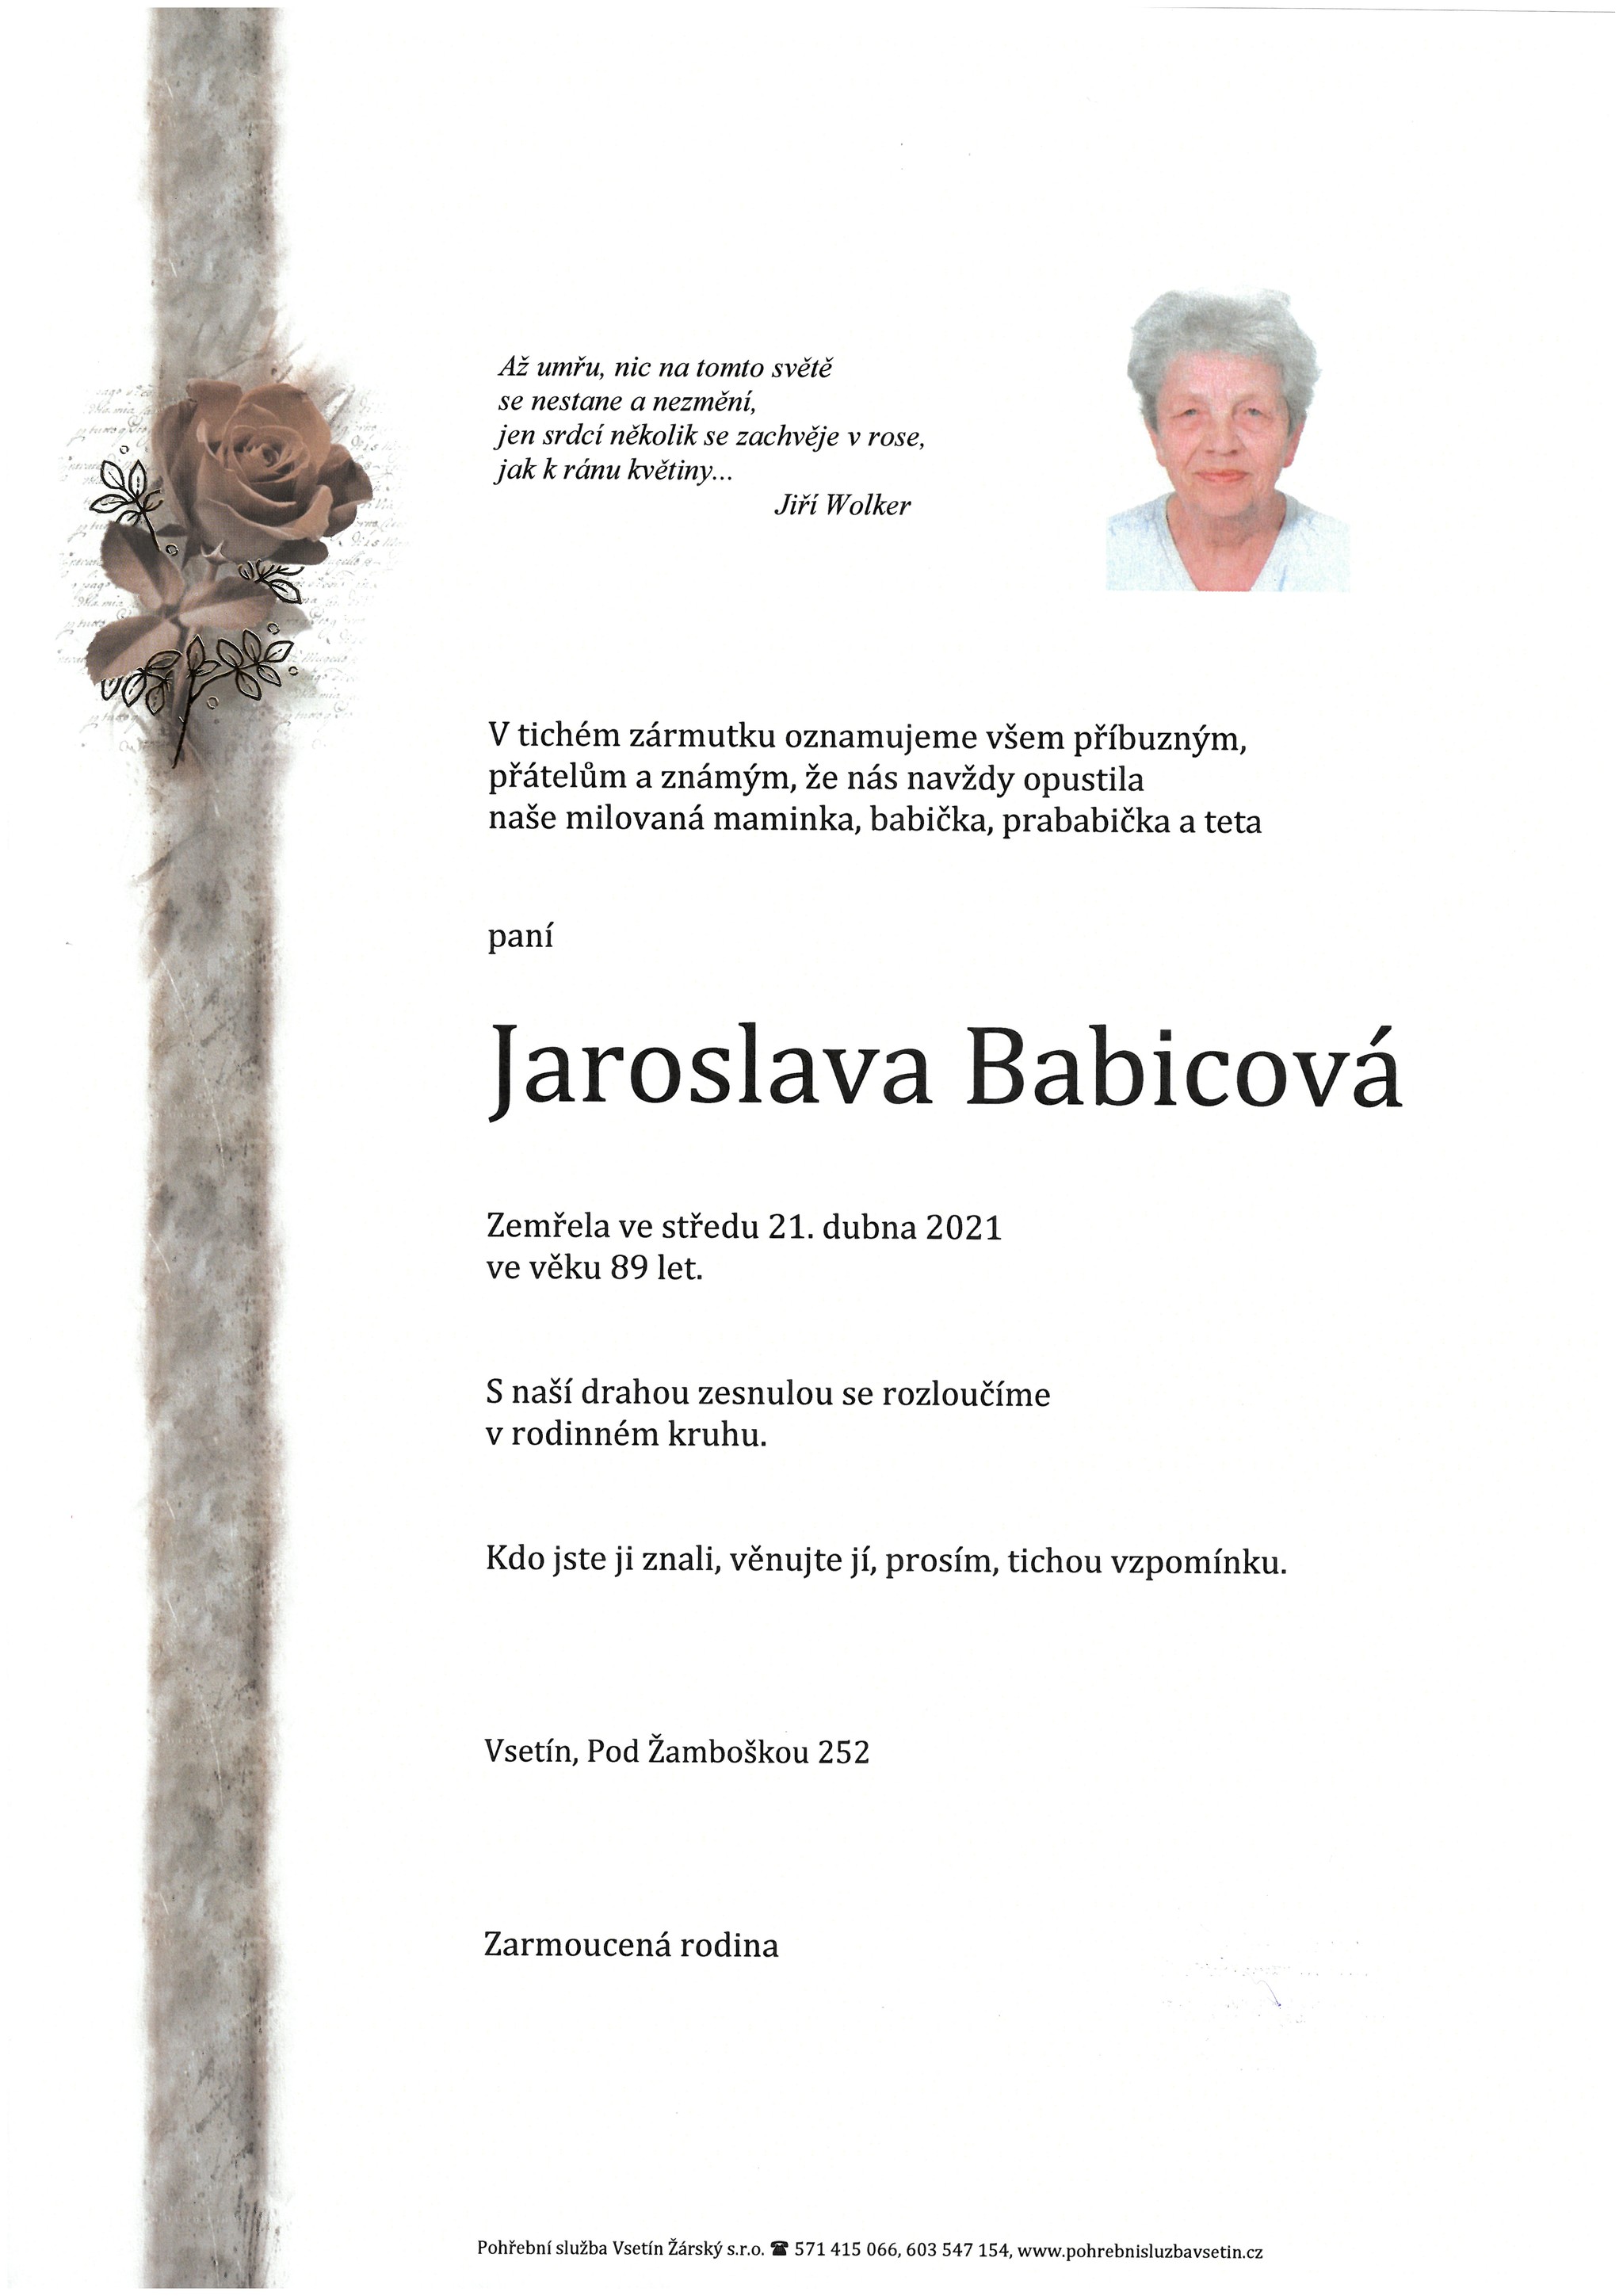 Jaroslava Babicová